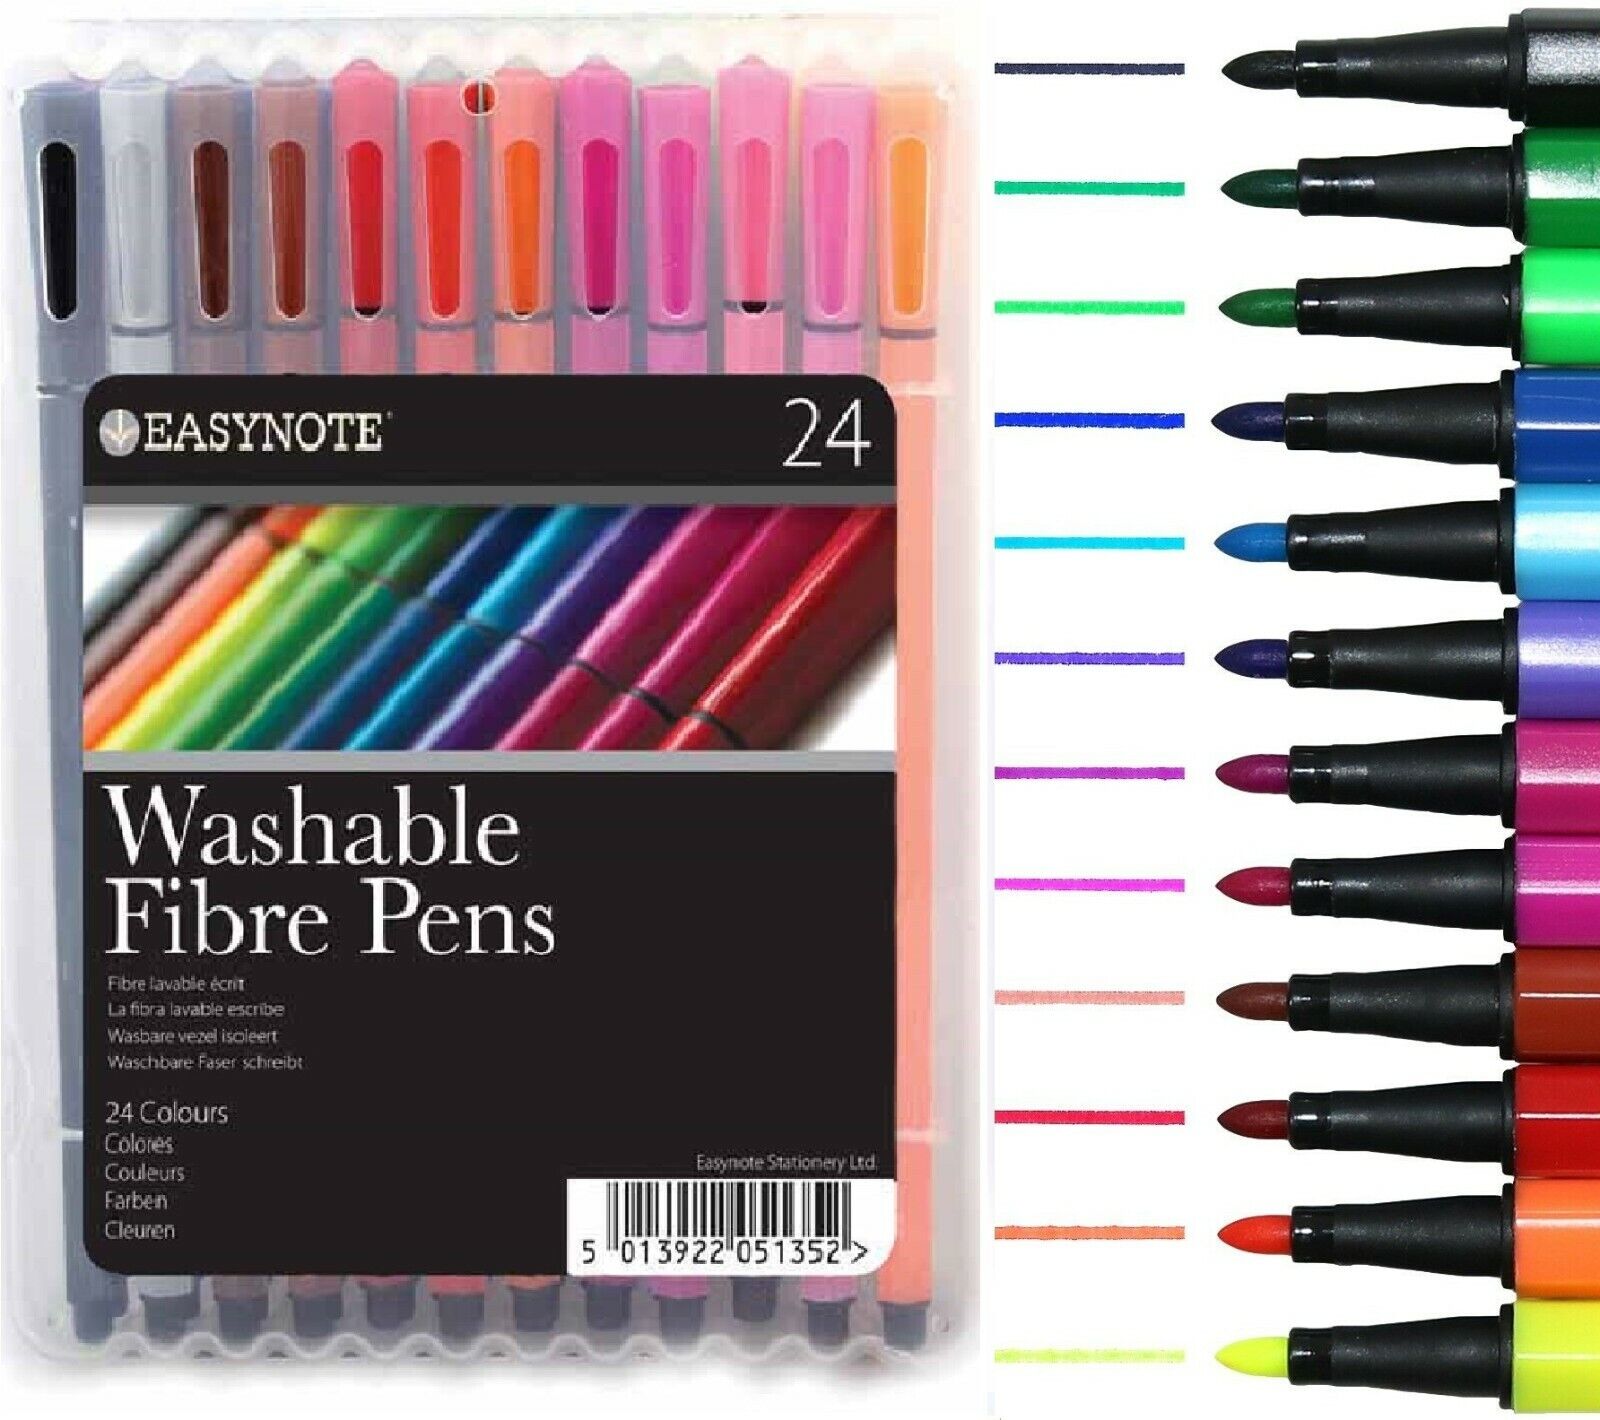 Beclen Harp 24 Easynote Washable Coloured Fibre Pens Felt Tips Markers Colouring Drawing Marker Art Box Set